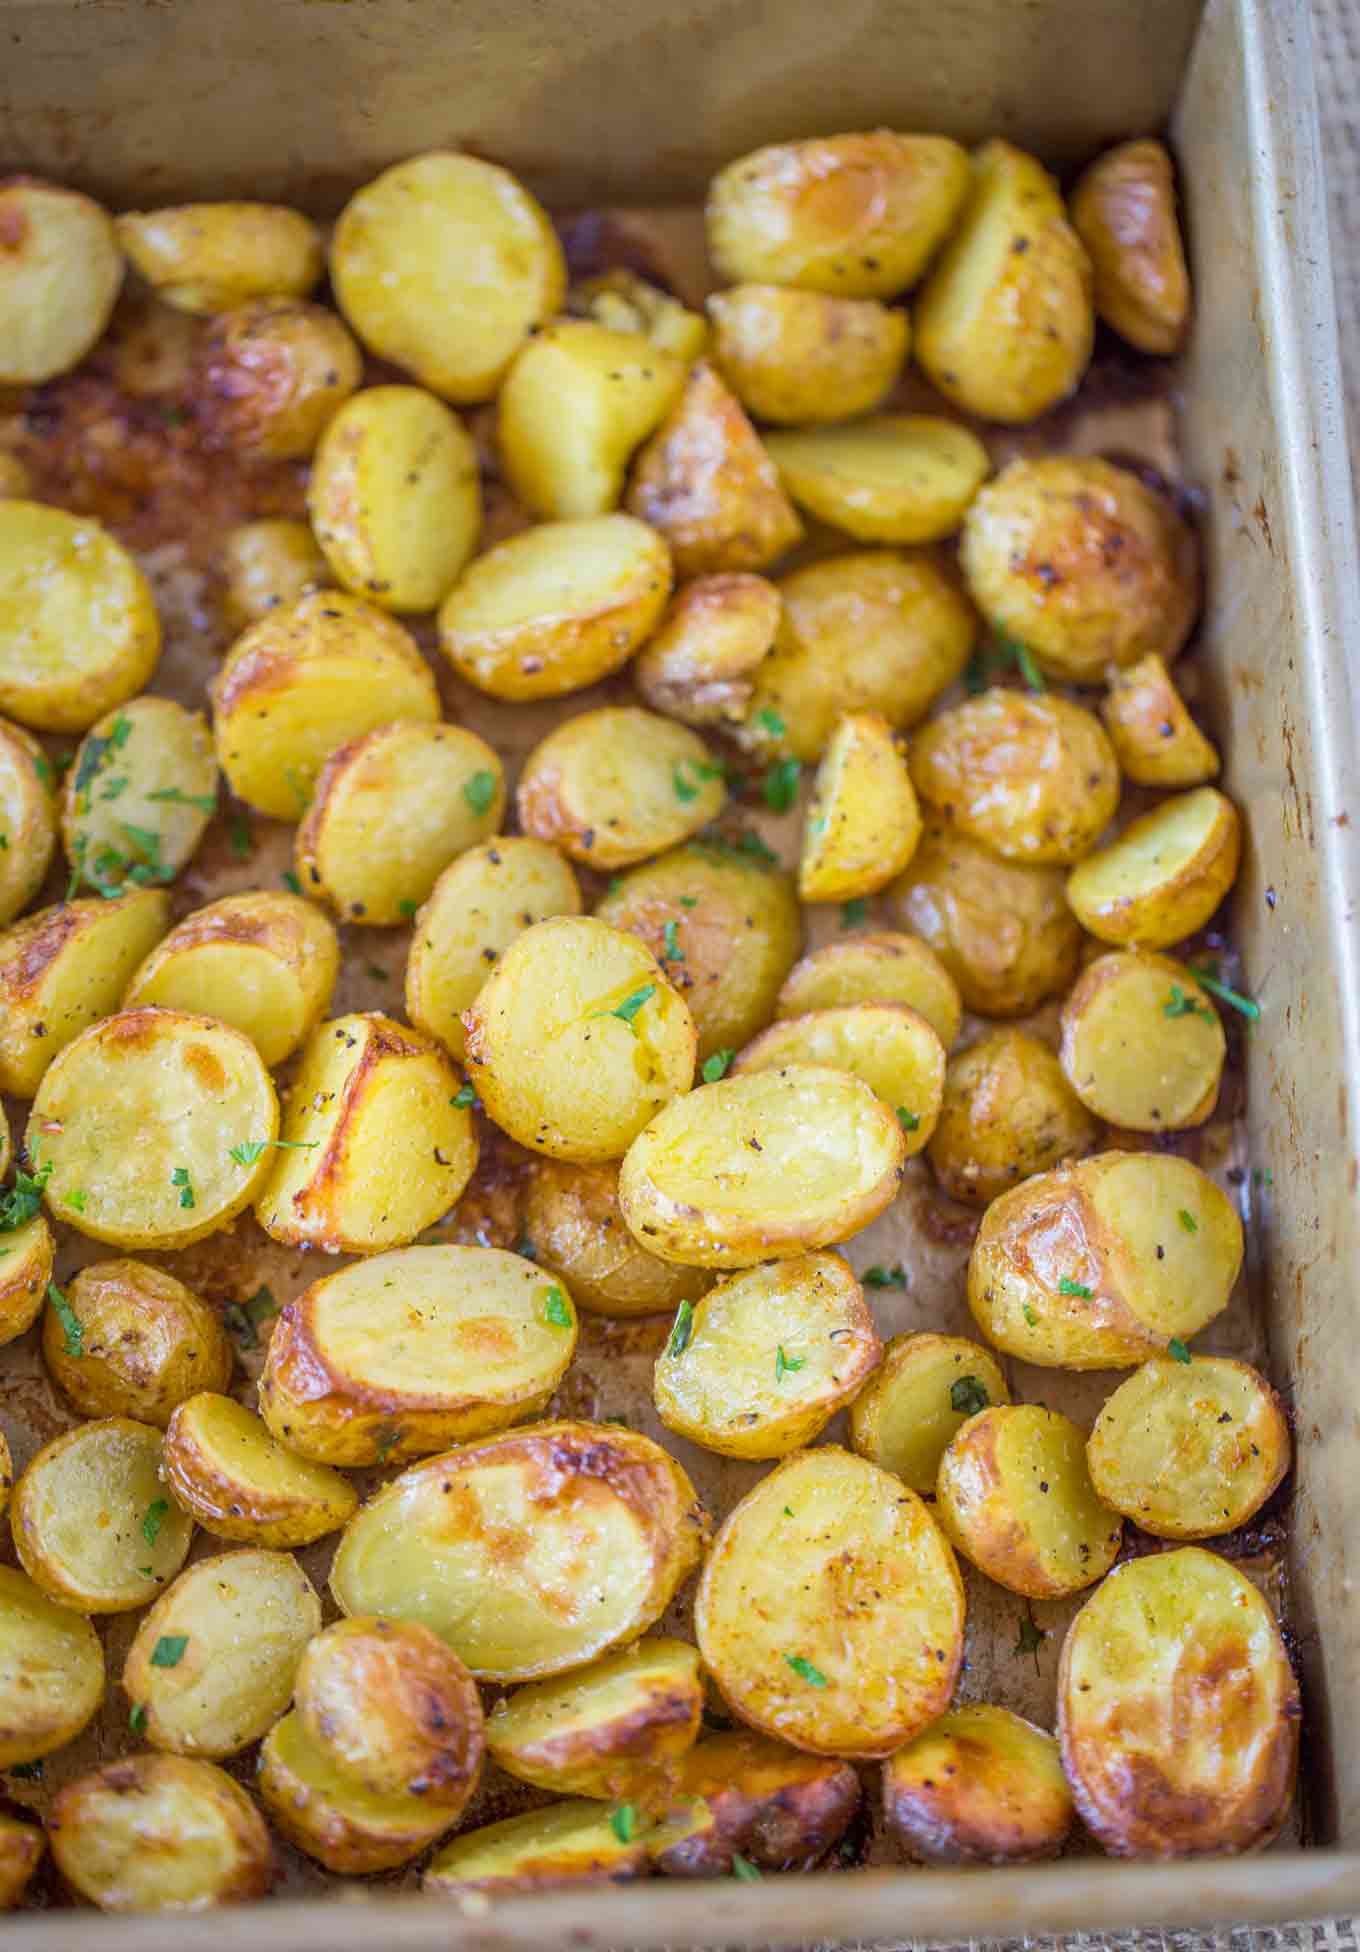 Roasted potatoes in pan